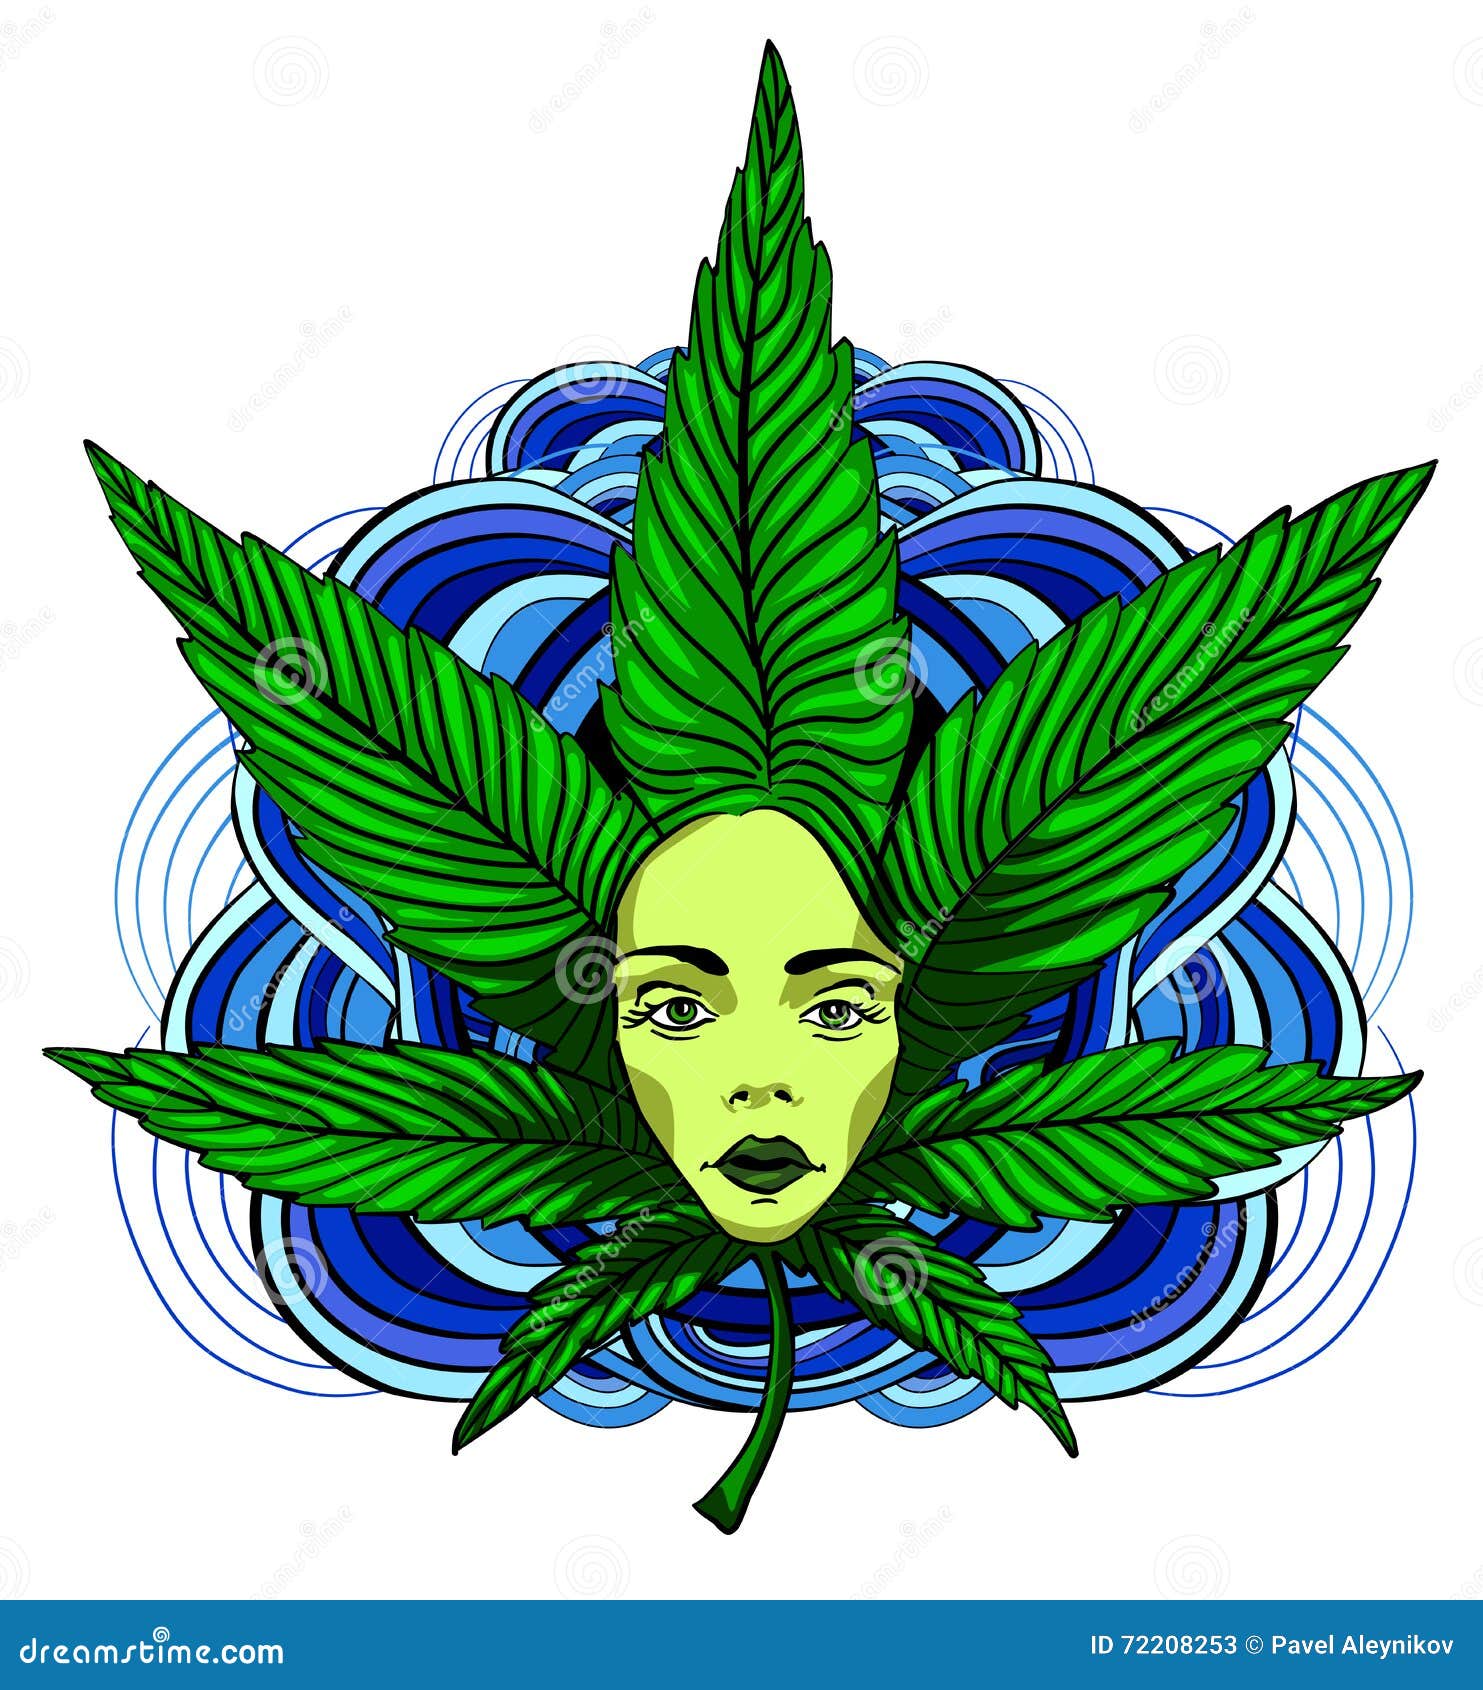 Картинки девушка с марихуаной тор браузер не заходит на сайт hydra2web